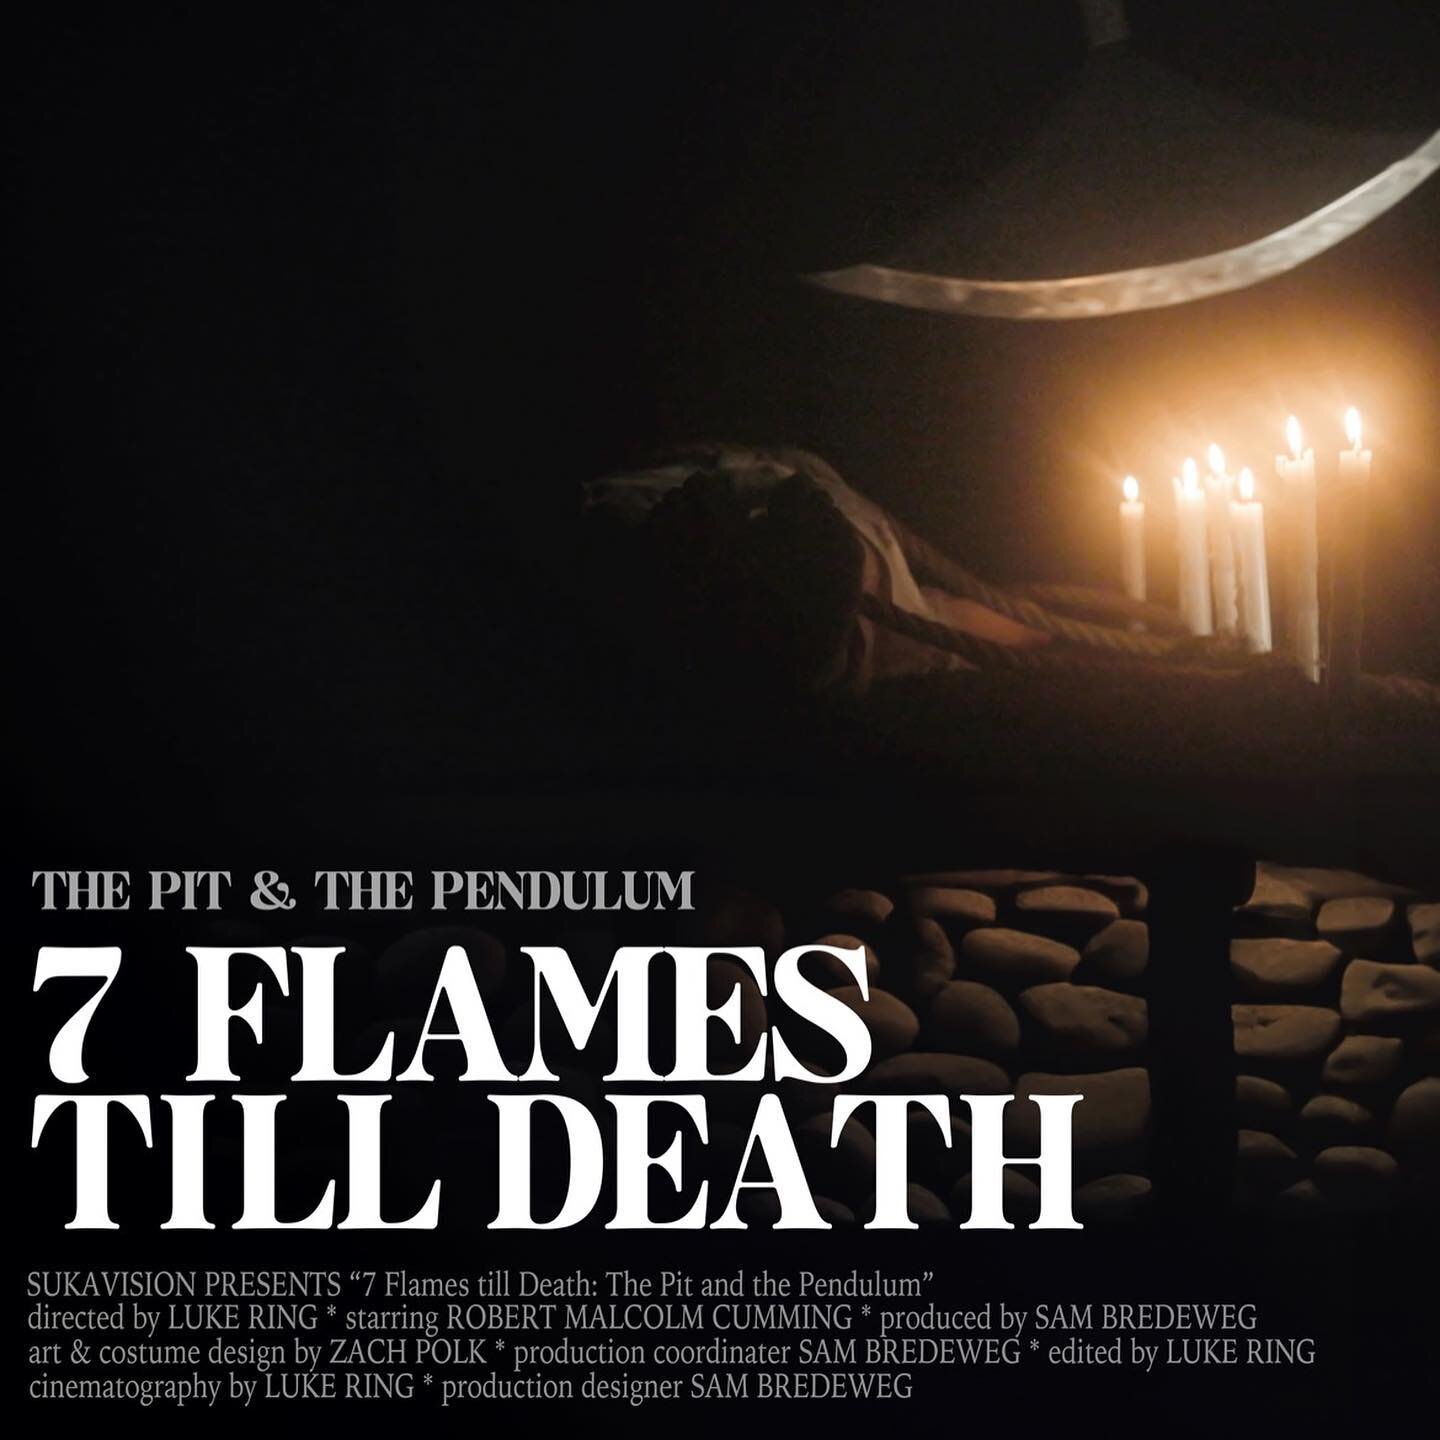 7 Flames Till Death: The Pit and the Pendulum.

8:00pm, Oct. 30th Online Premiere CTZ

Cast
@malcolm.url
@mikebreds 

Crew
@luker1ng 
@sam_bredeweg 
@zach.polk 

#short #film #horror #thriller #independent #act #actor